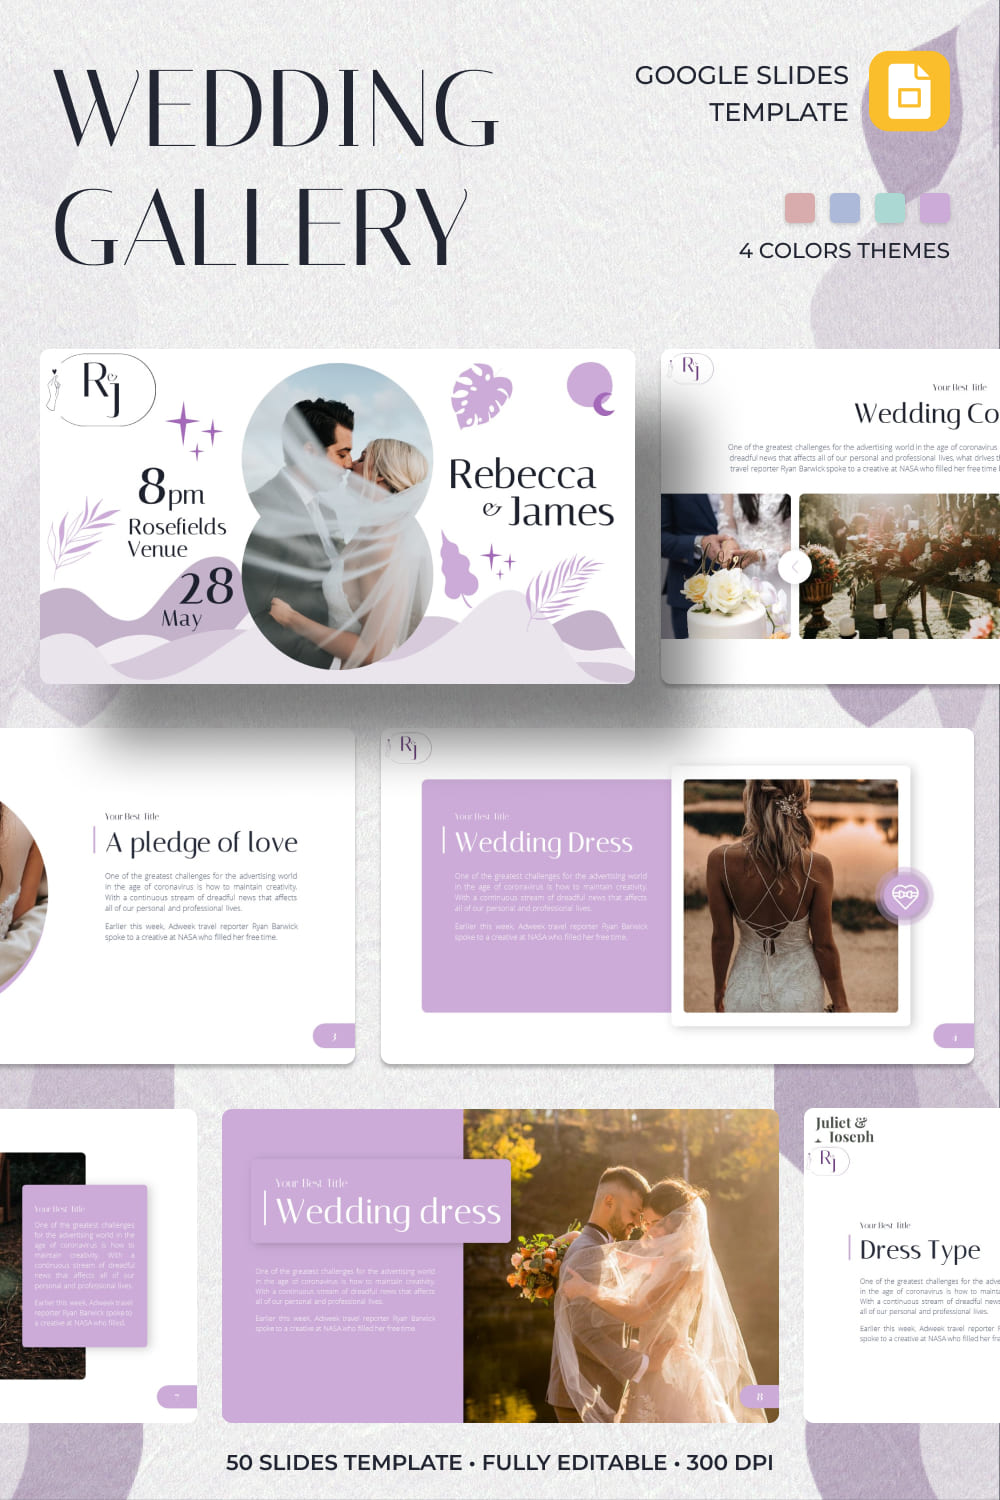 Wedding Gallery Google Slides Theme cover.